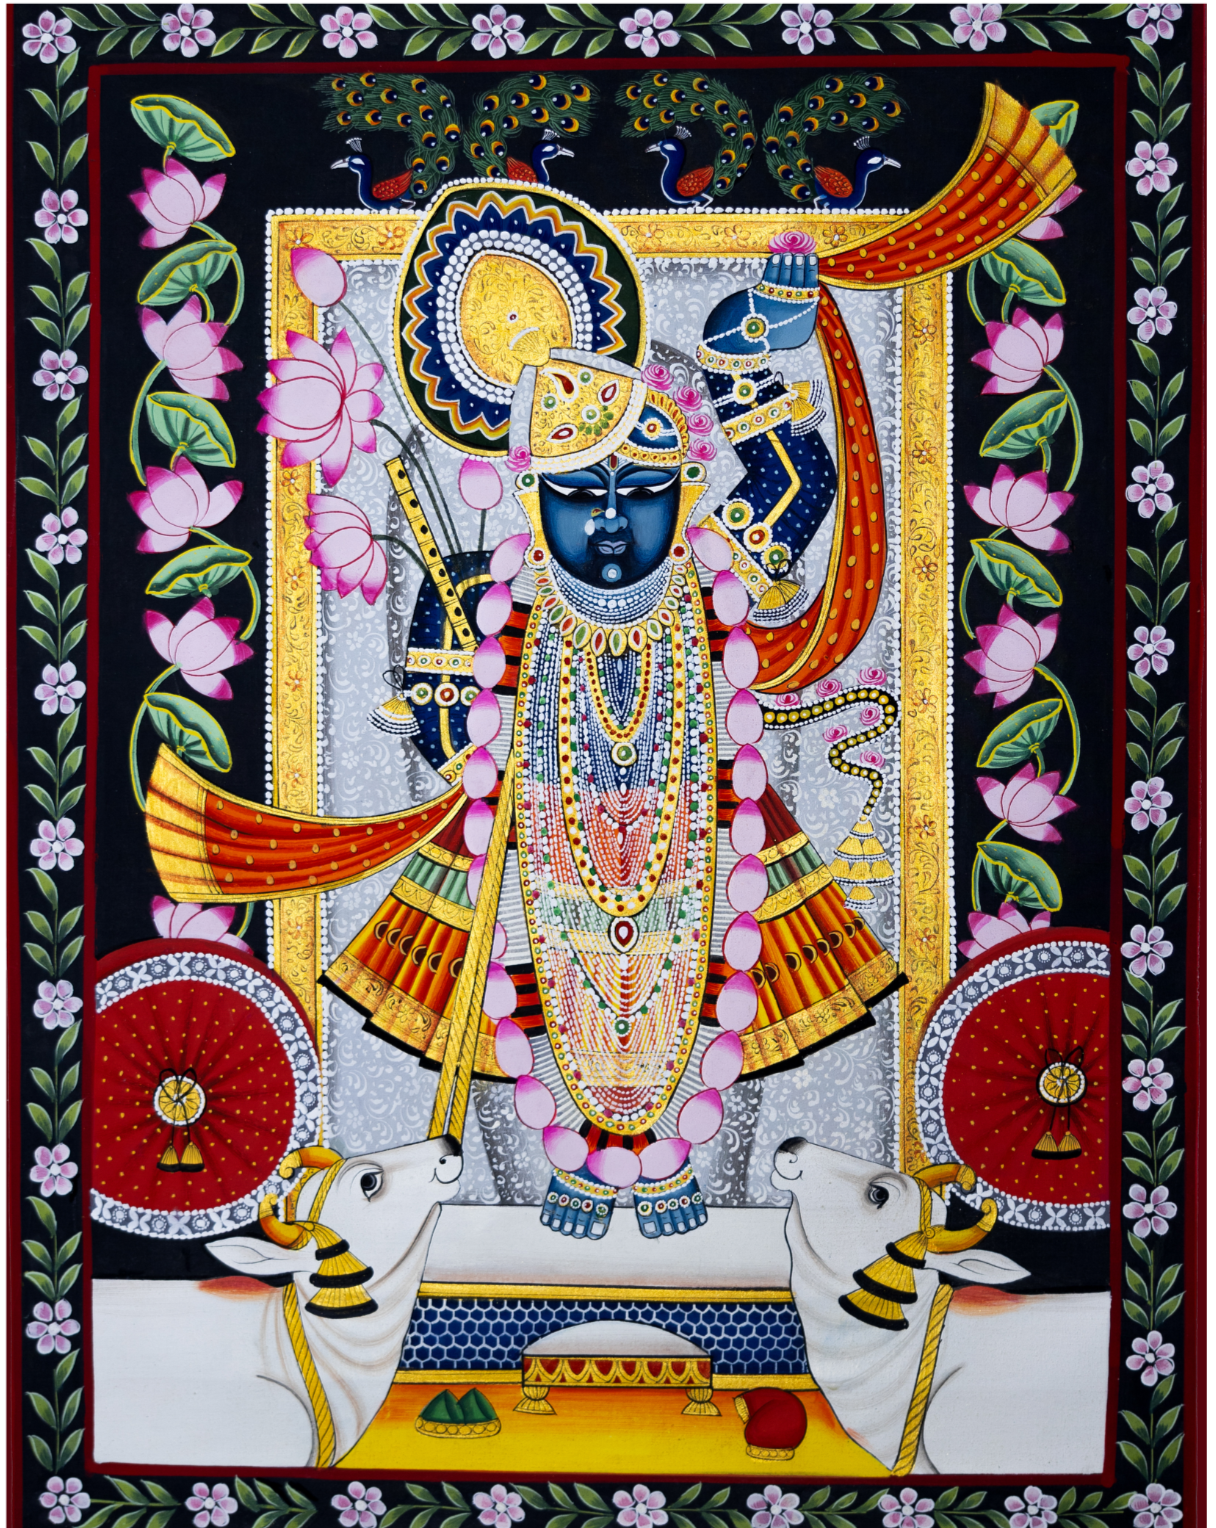 Buy Shrinathji Pichwai Painting | Indian Art for Wall Decor